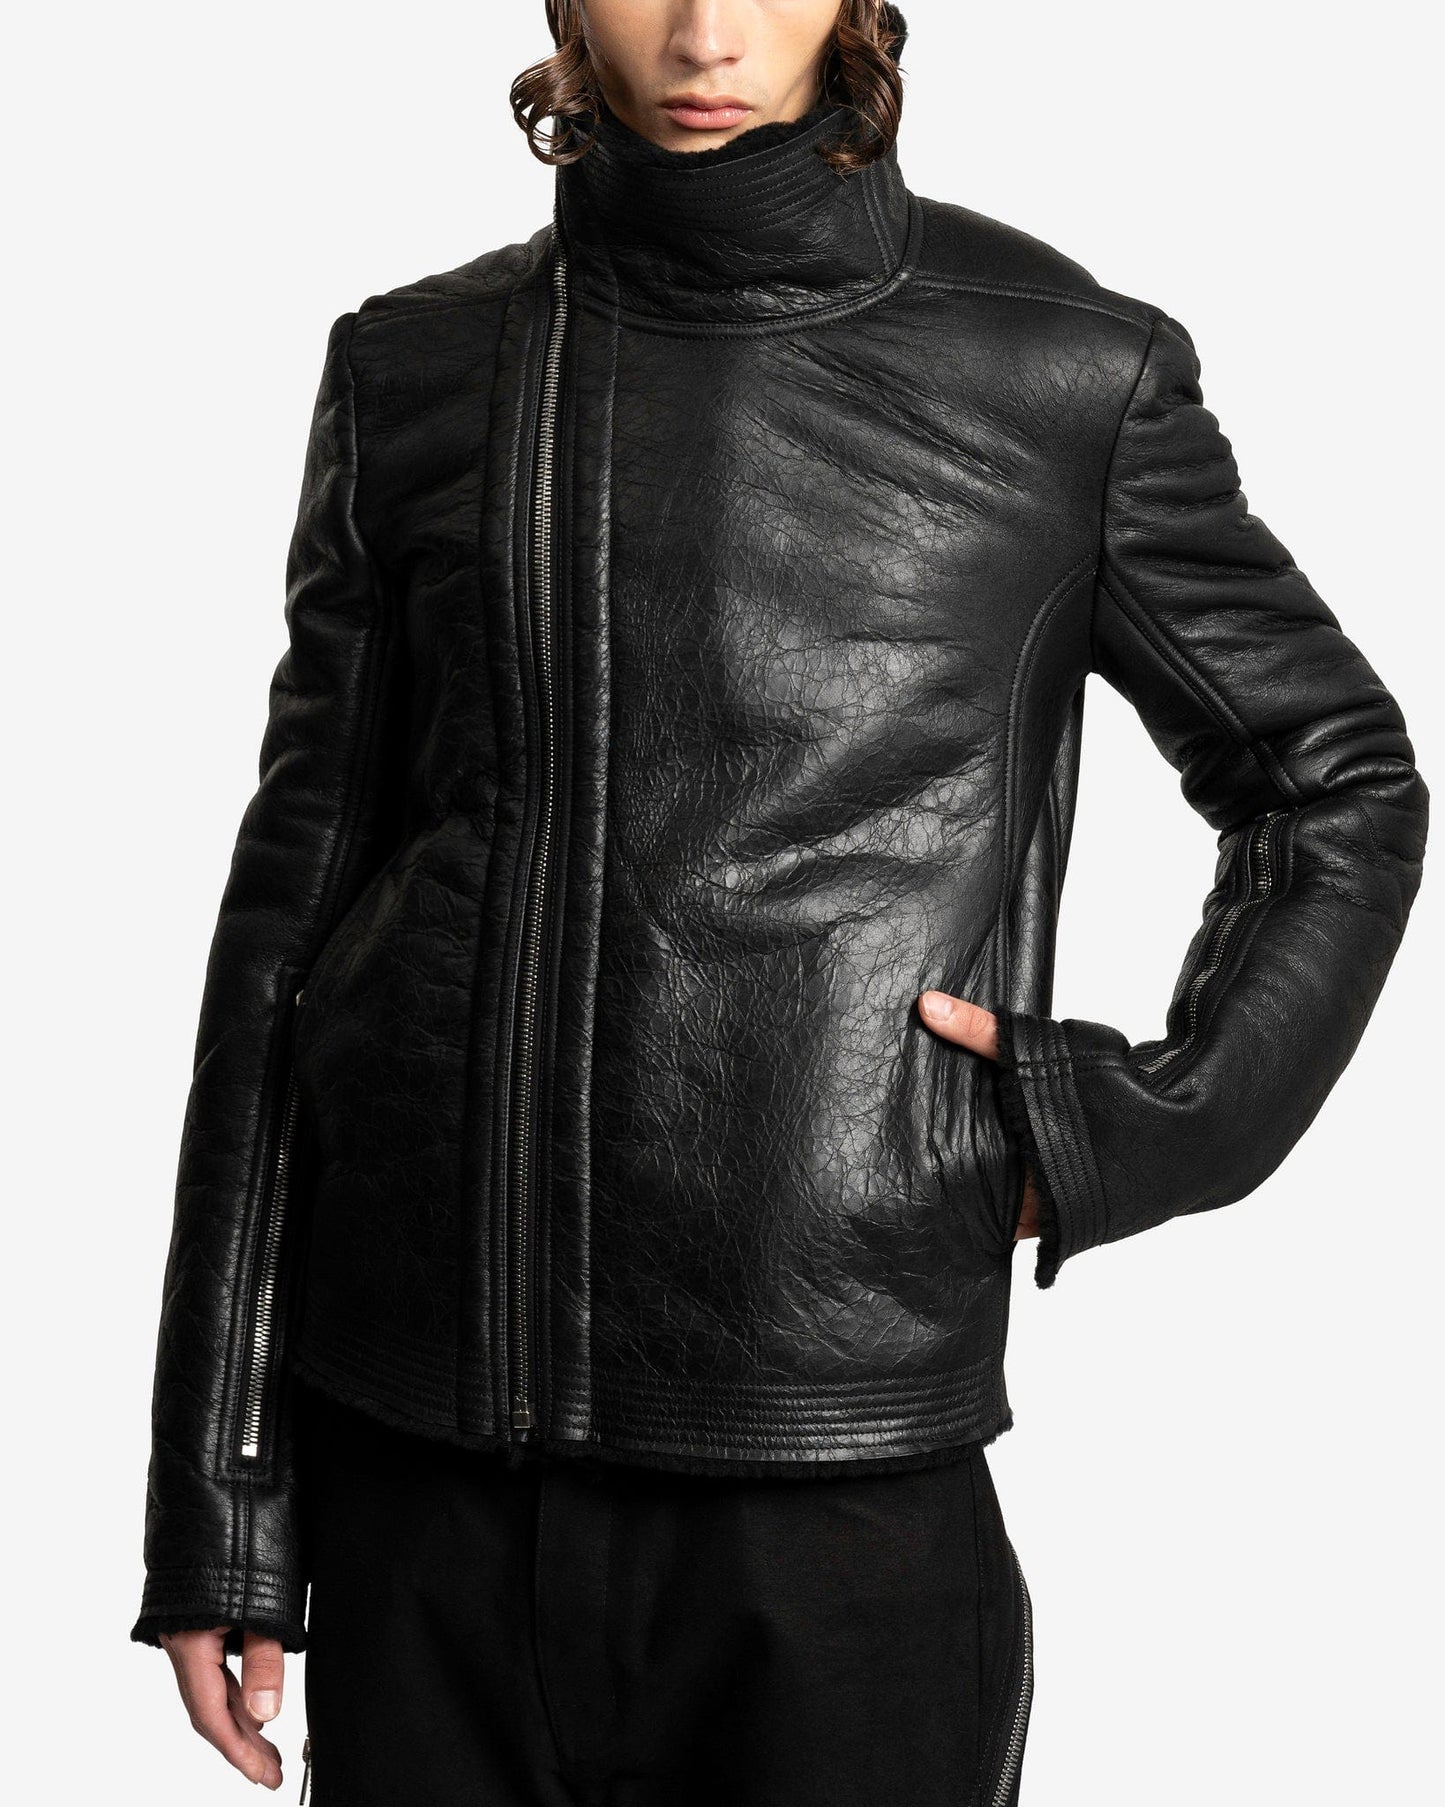 Rick Owens Men's Jackets Bauhaus Jacket in Black